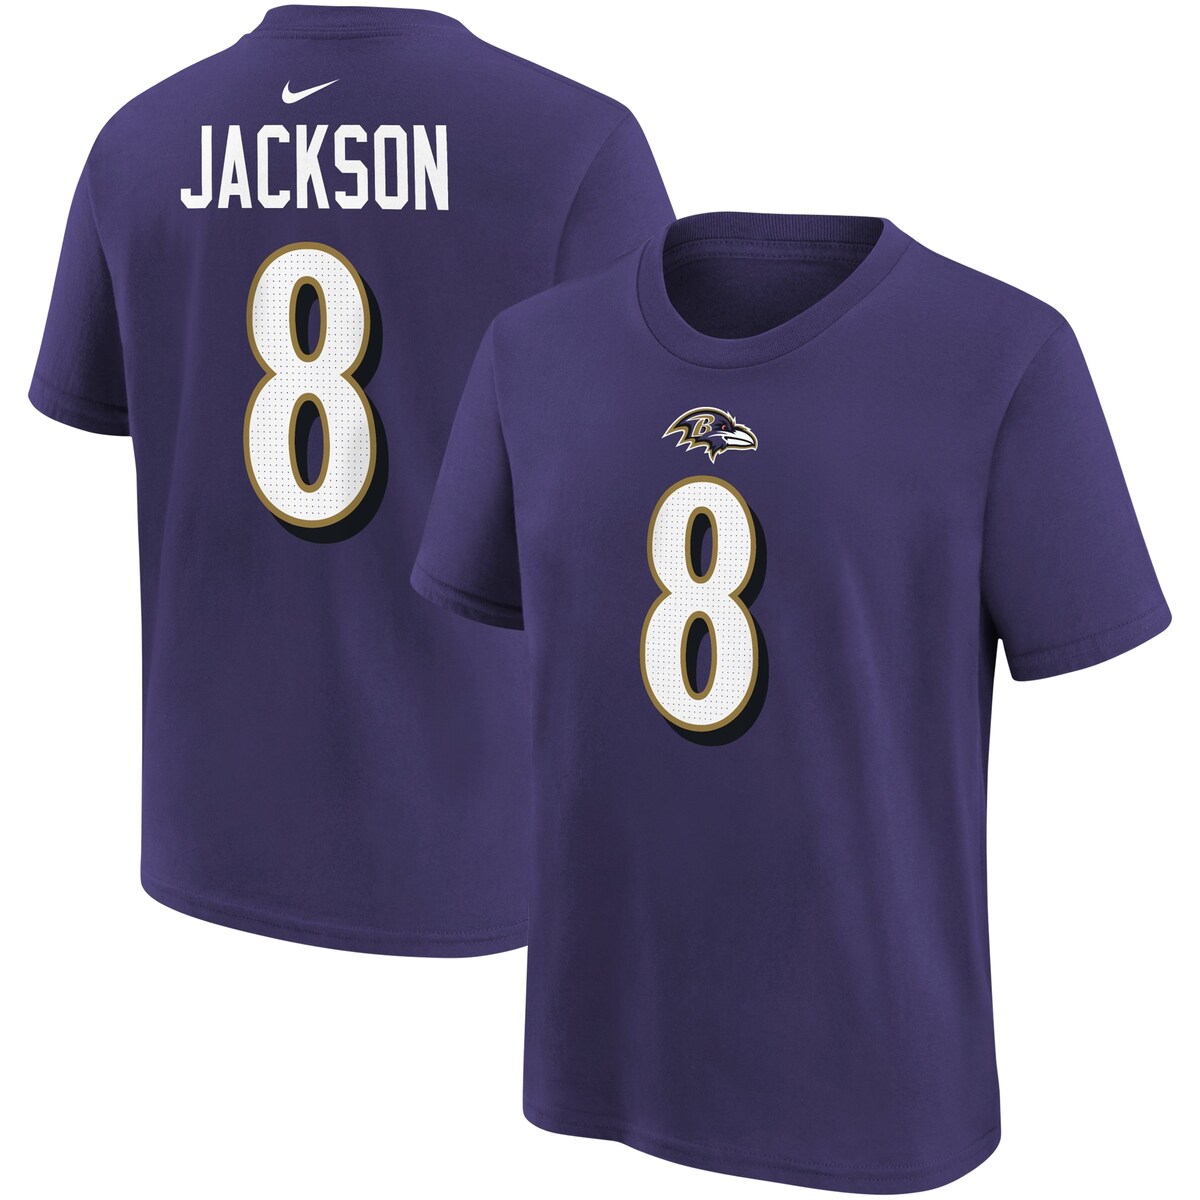 NFL レイブンズ ラマー・ジャクソン Tシャツ Nike ナイキ トドラー パープル (23 Juvenile Nike 4-7 Player N&N SST)